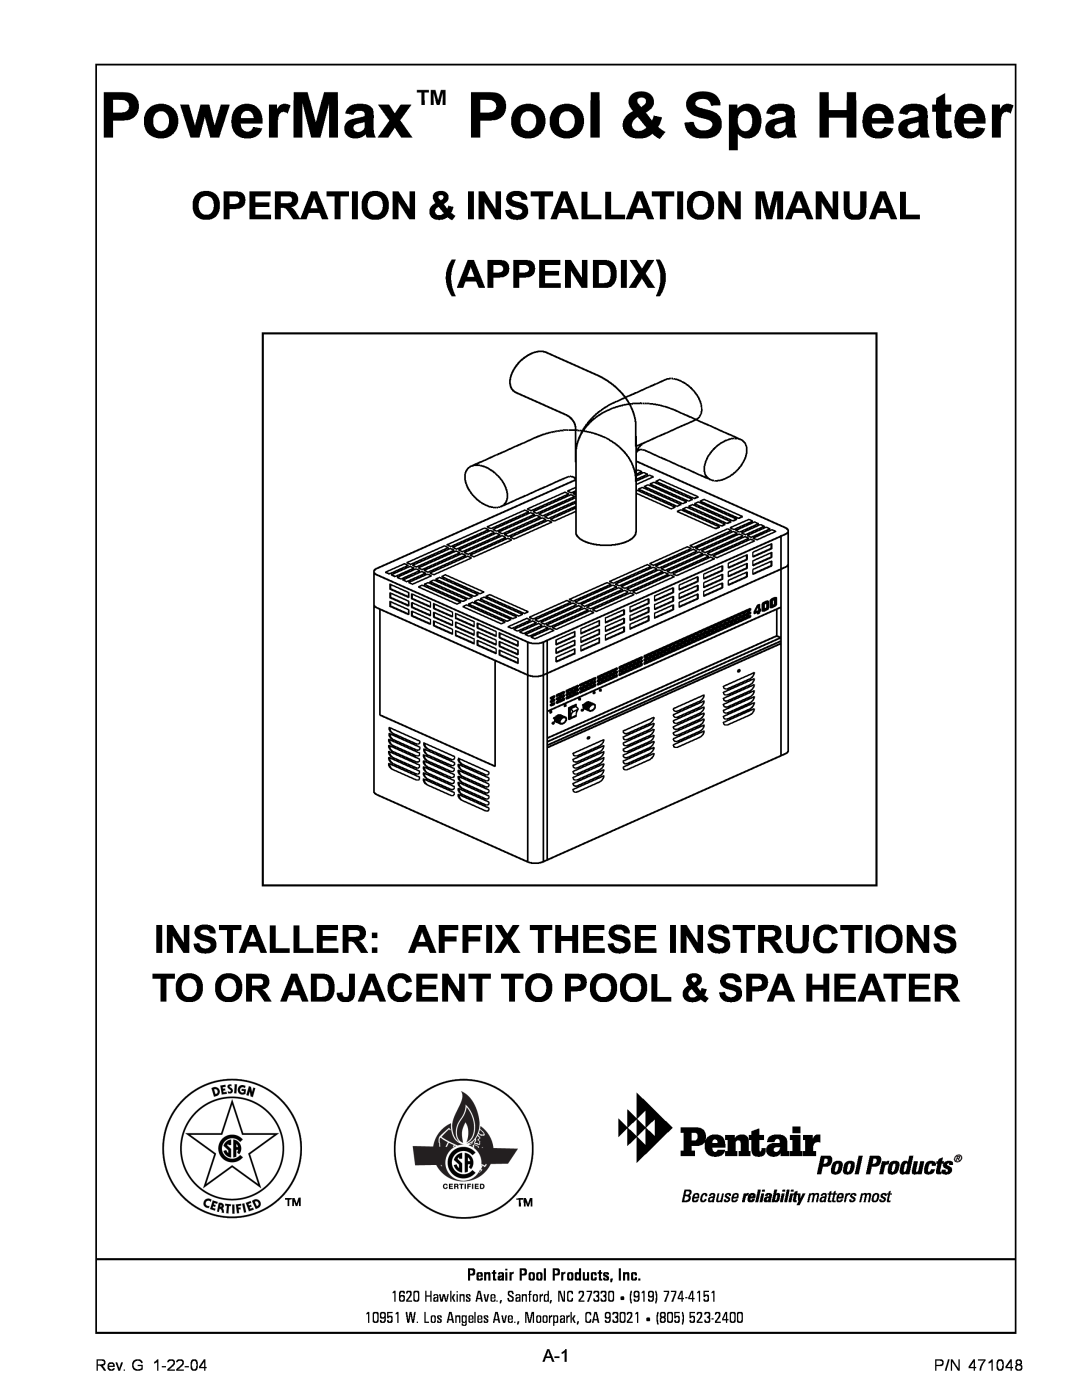 Pentair MiniMax Plus HP Series installation manual PowerMax Pool & Spa Heater, Operation & Installation Manual, Appendix 